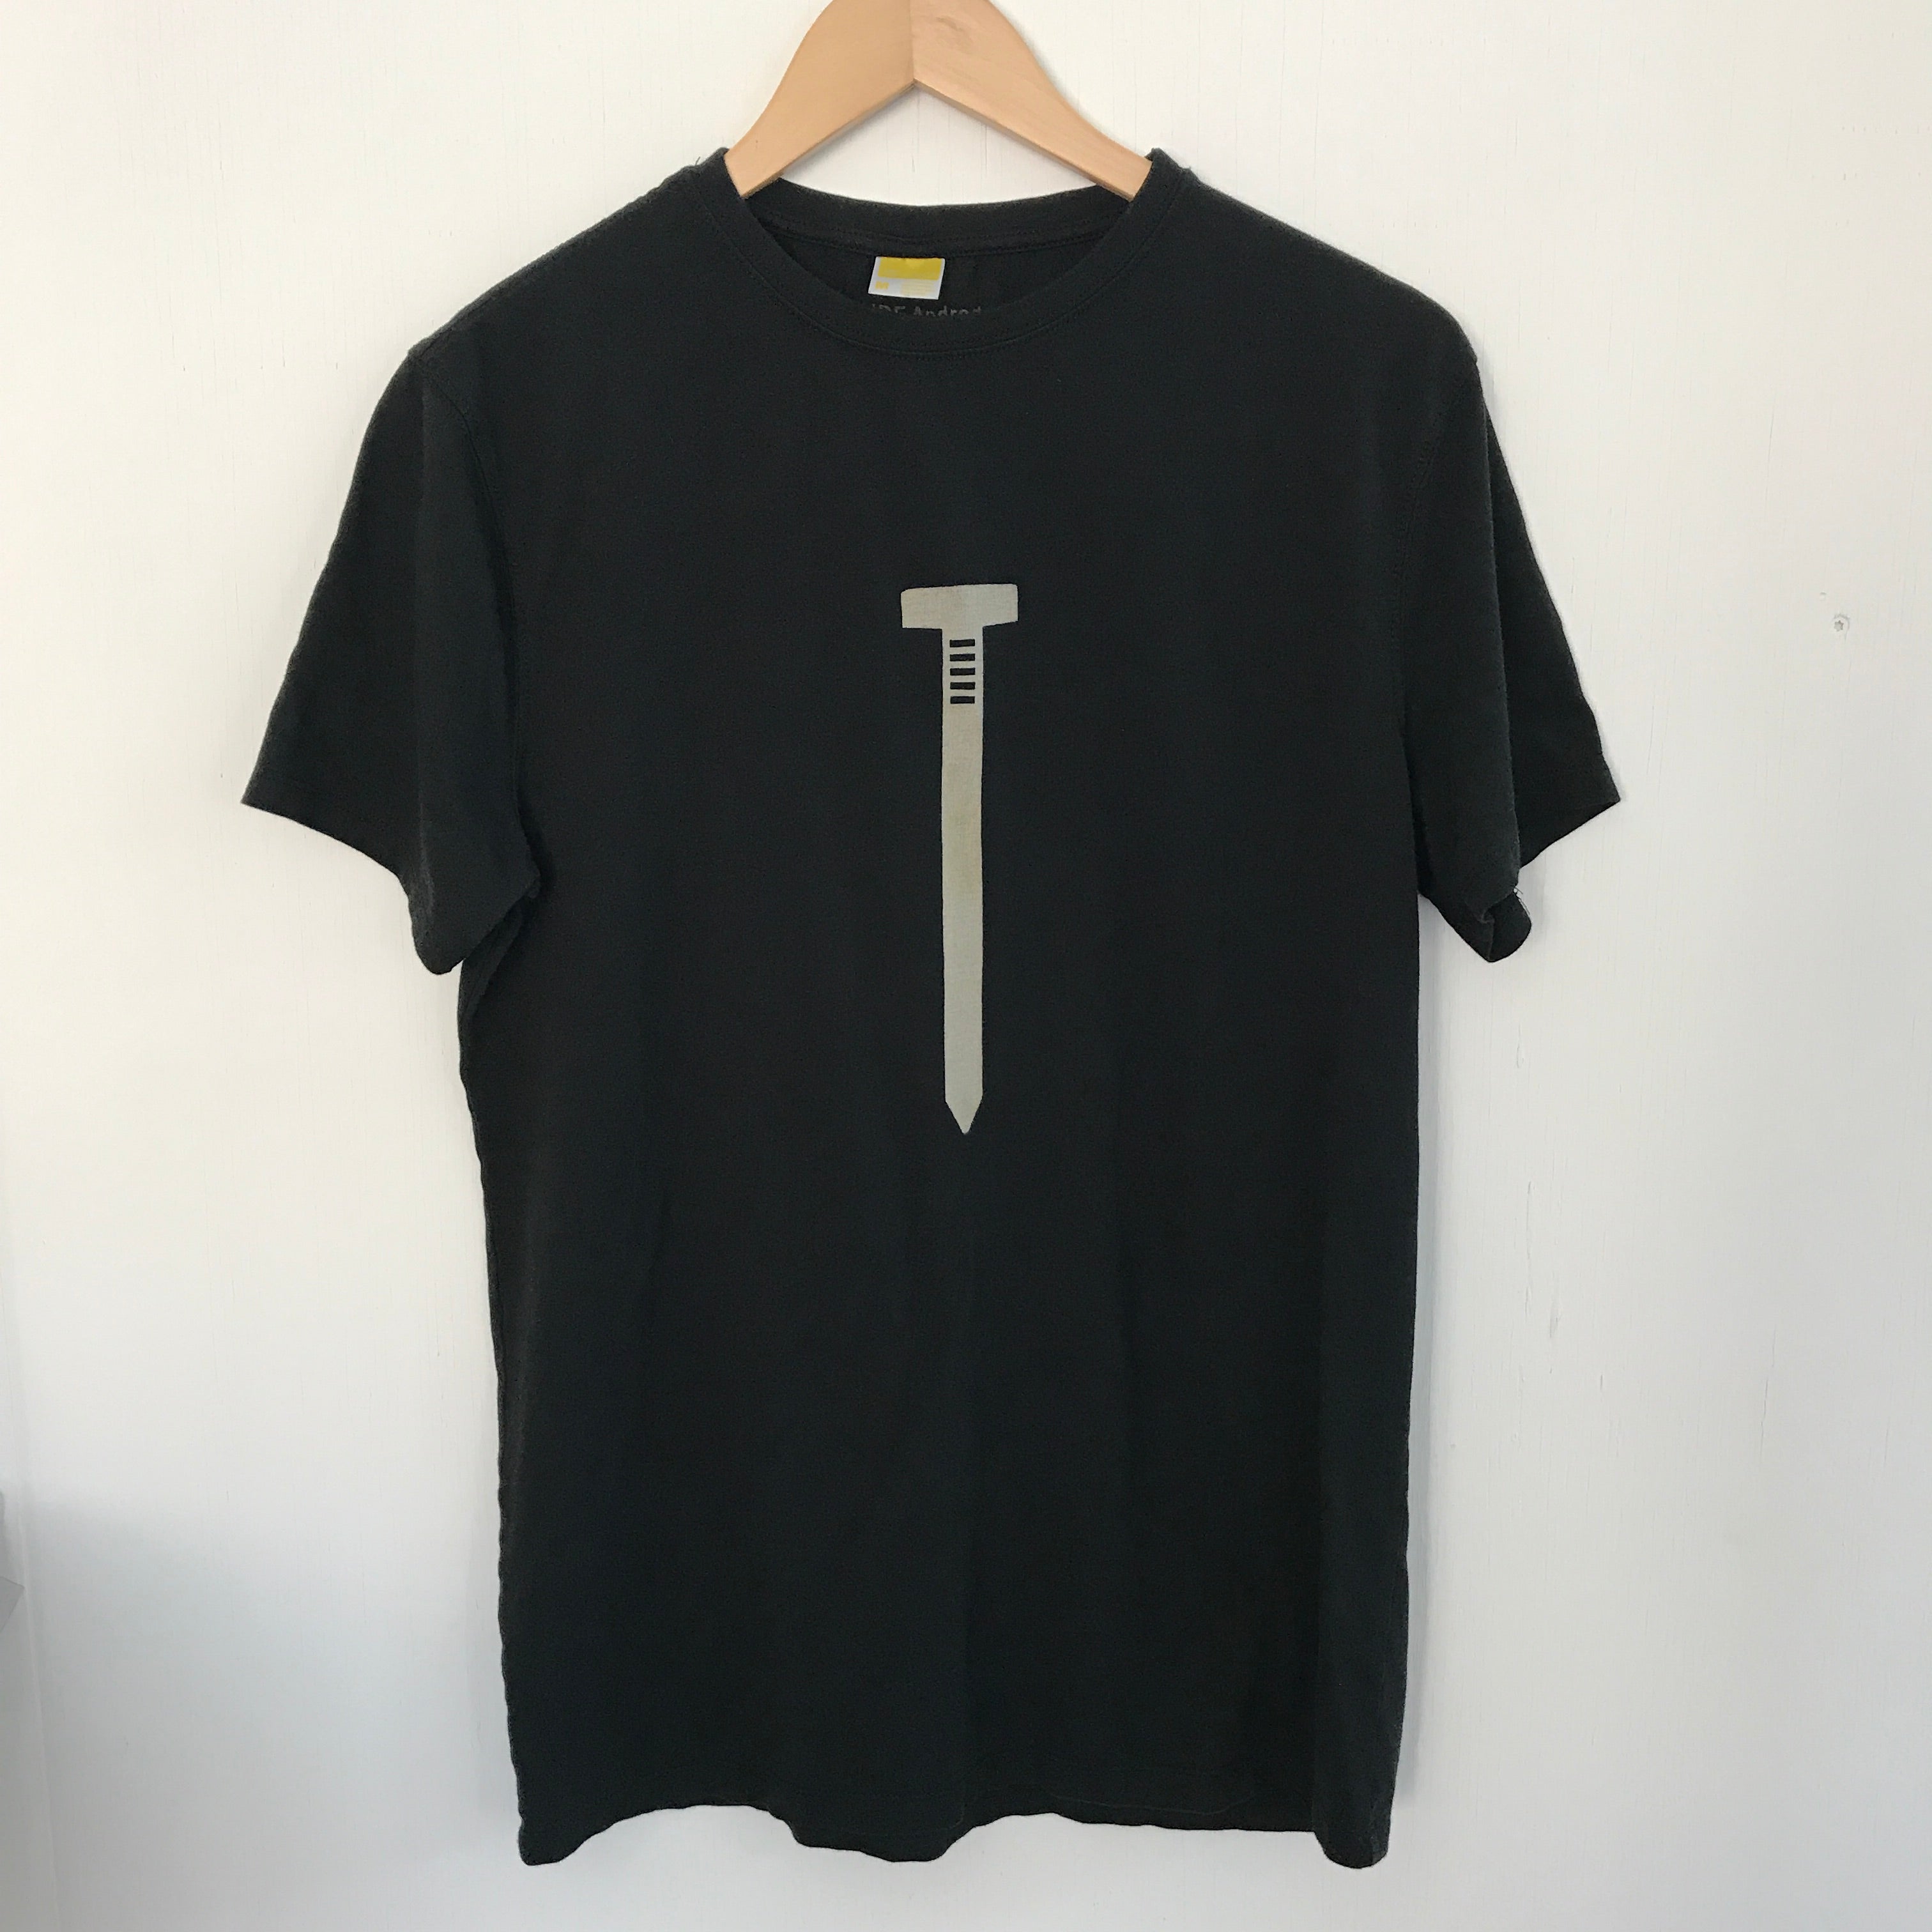 Bamboo Swift Curve-Hem T-Shirt - Sandstone Large / Black